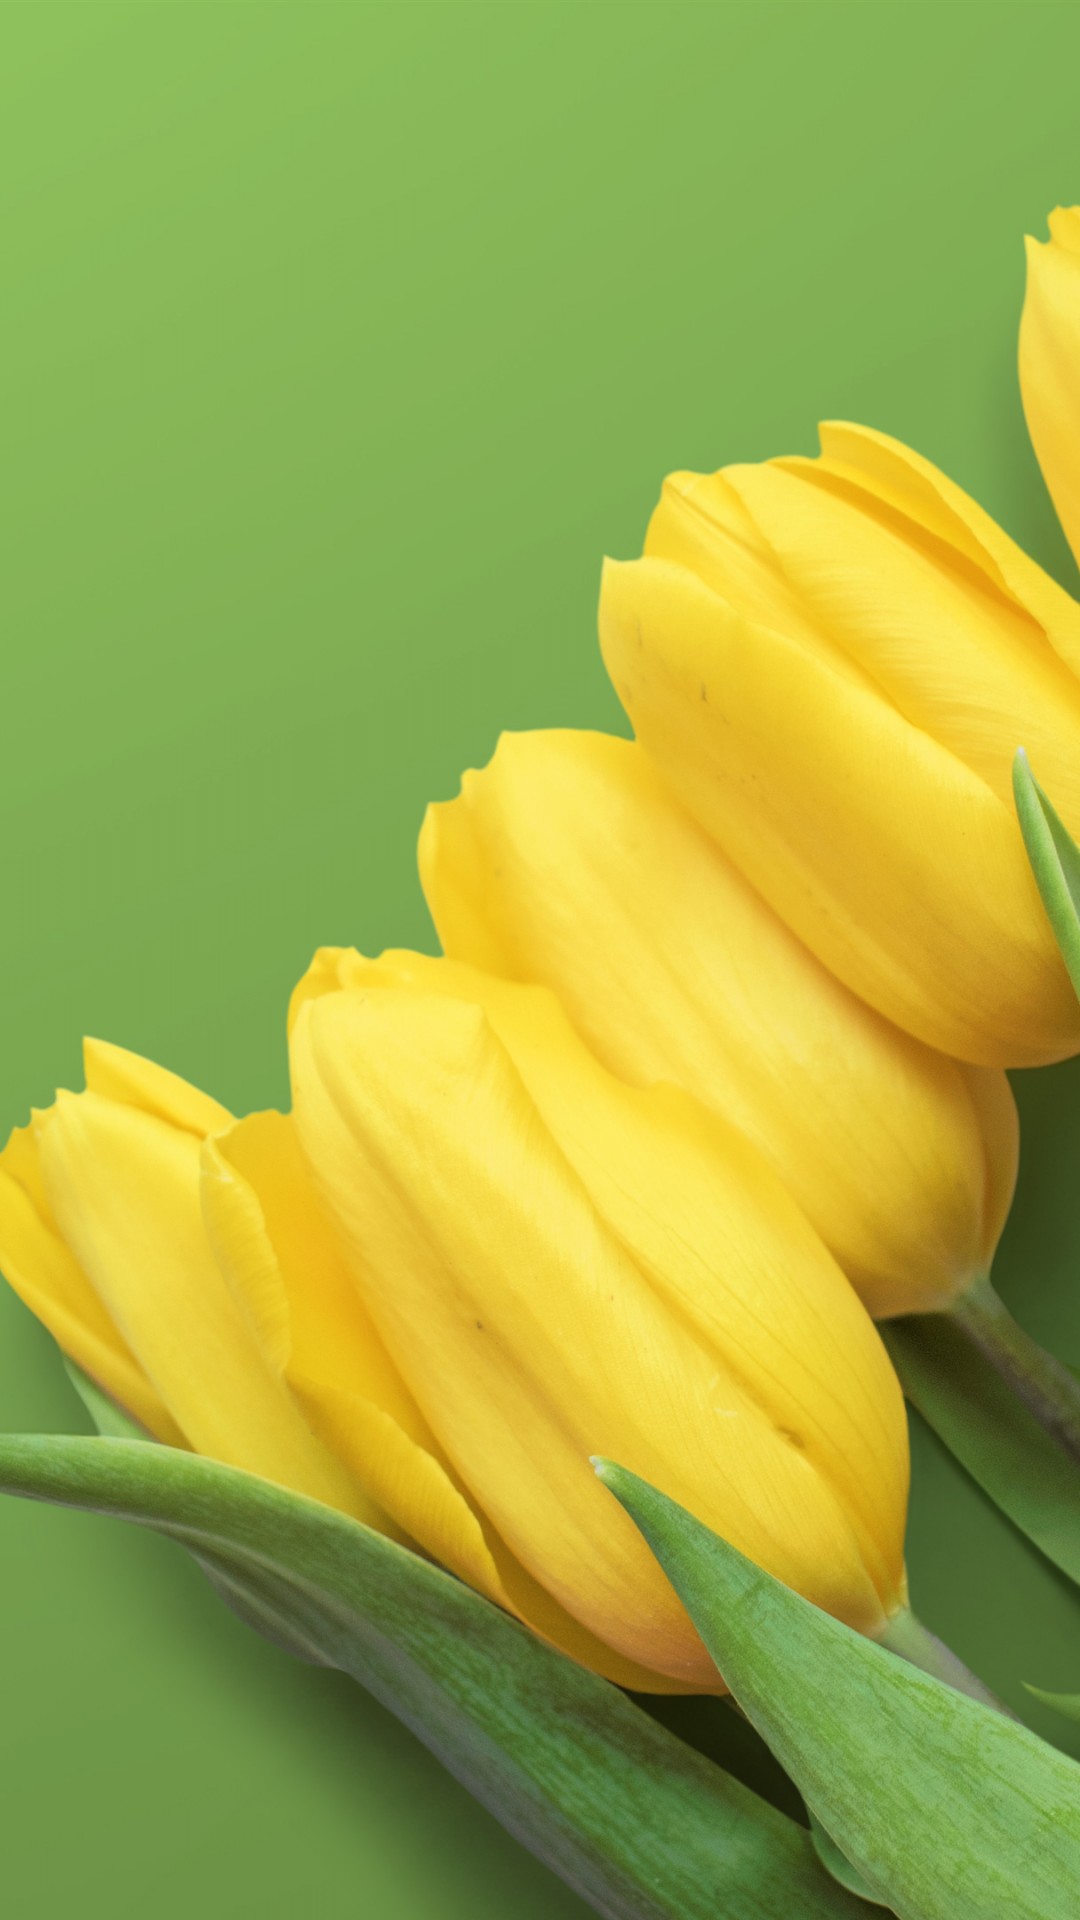 Yellow Tulips 4K Wallpaper iPhone 6 / 6S Plus - HD Wallpaper - Wallpapers .net